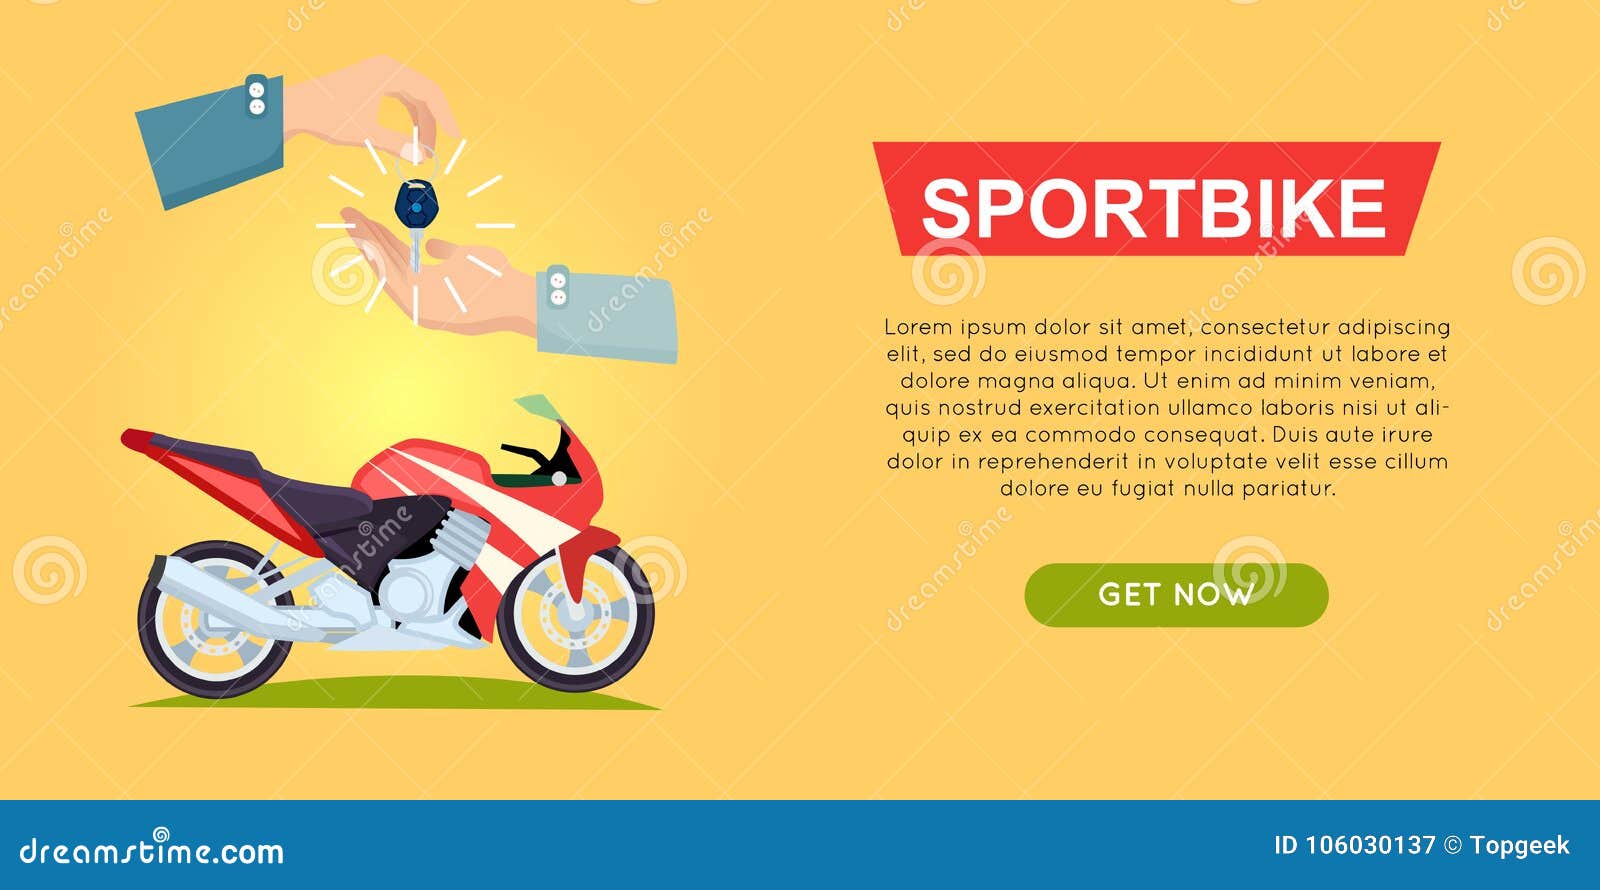 Buying Sportbike Online. Bike Sale